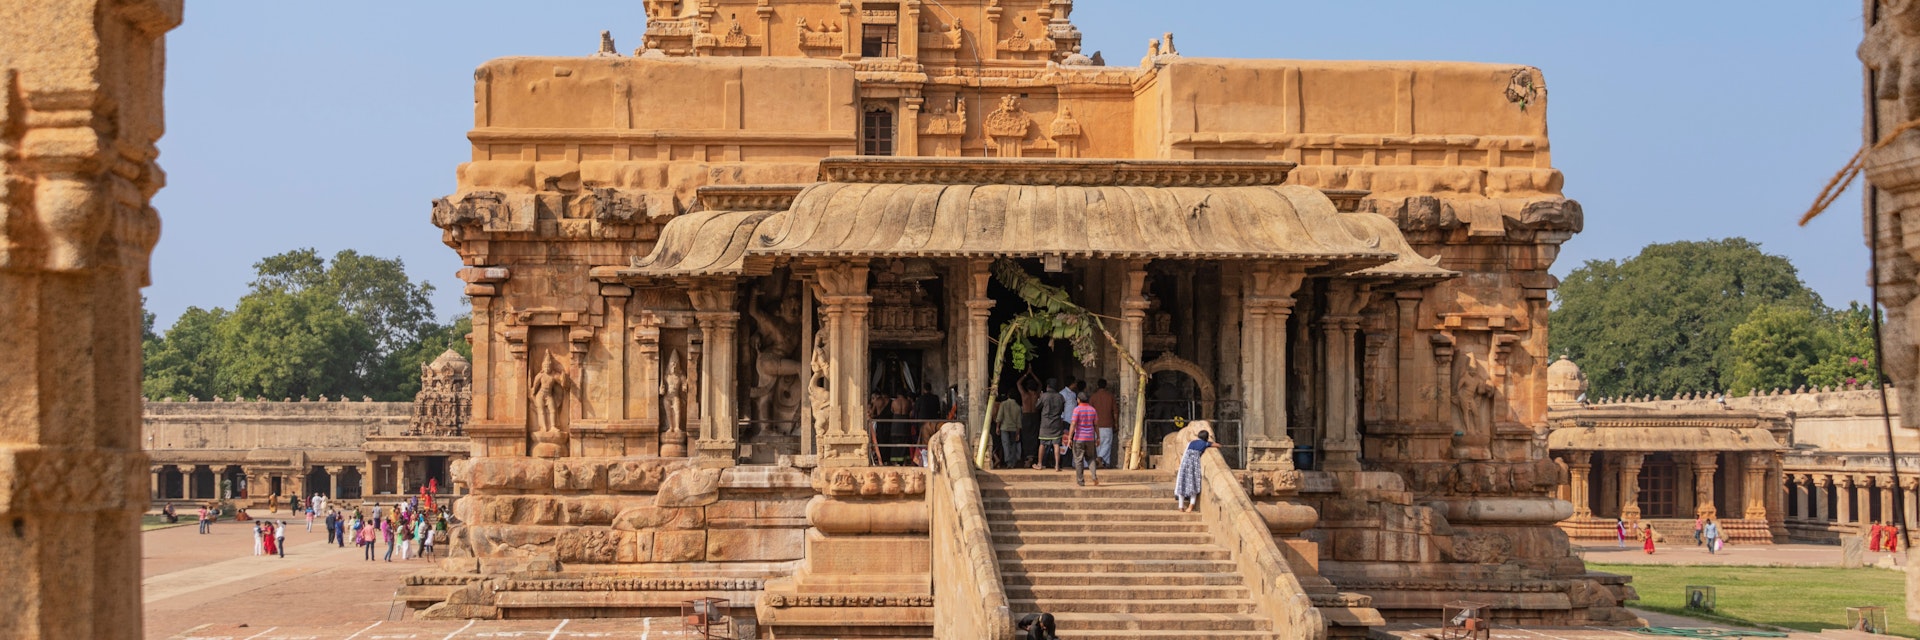 Thanjavur (Tanjore) - Brihadishwara Temple, Tamil Nadu, India - stock photo
